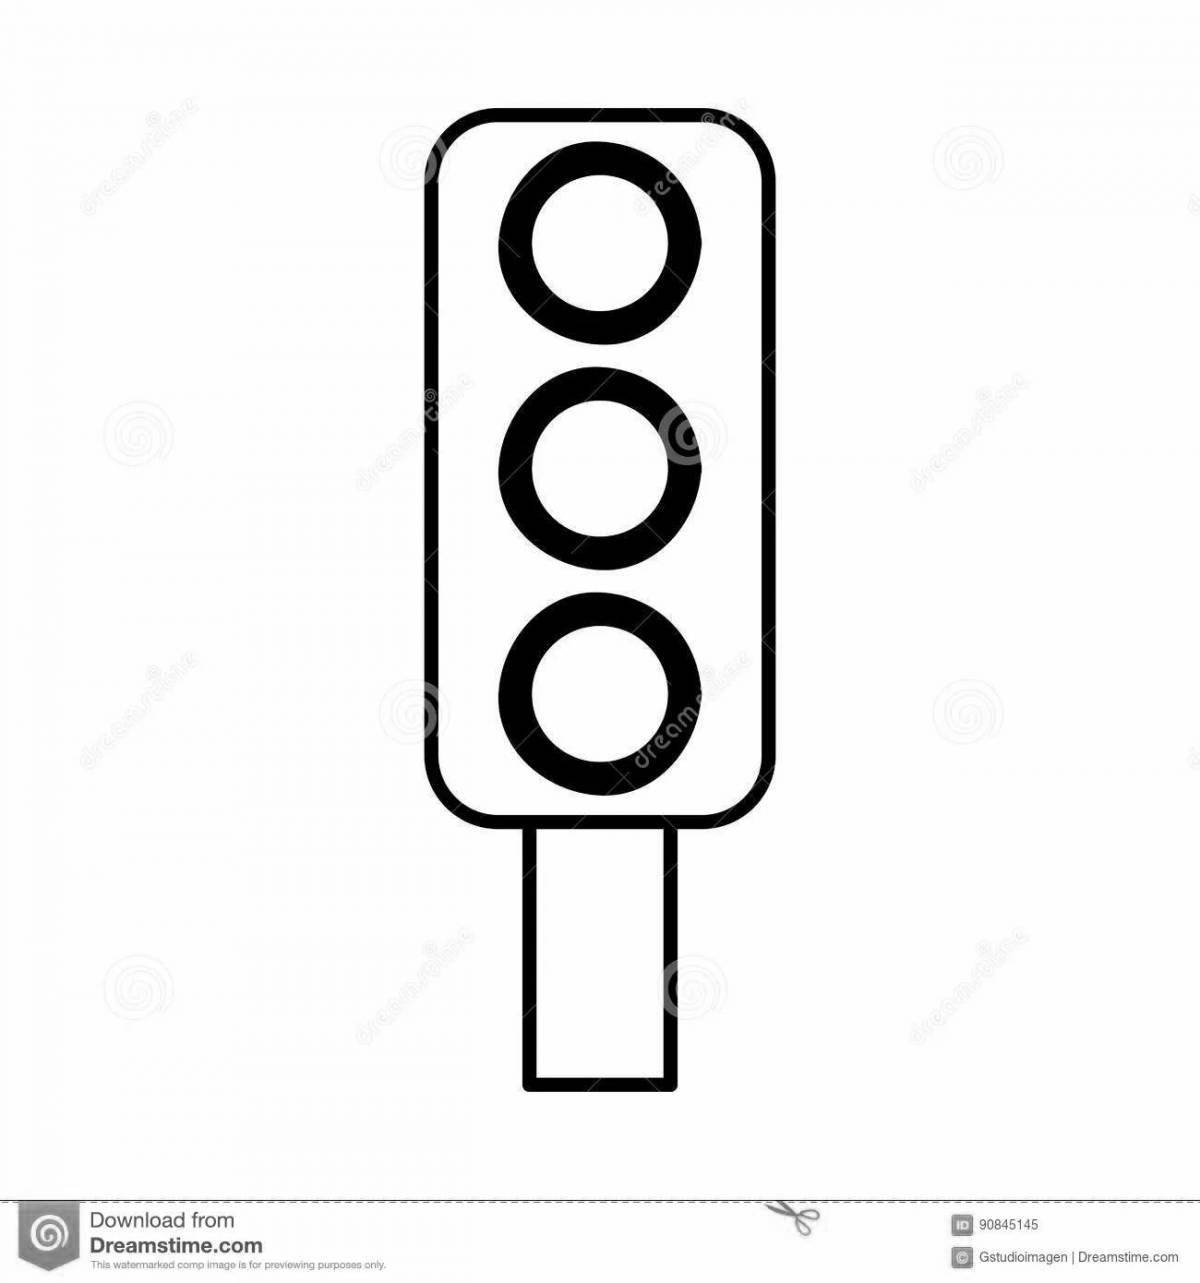 Traffic light for preschoolers #3